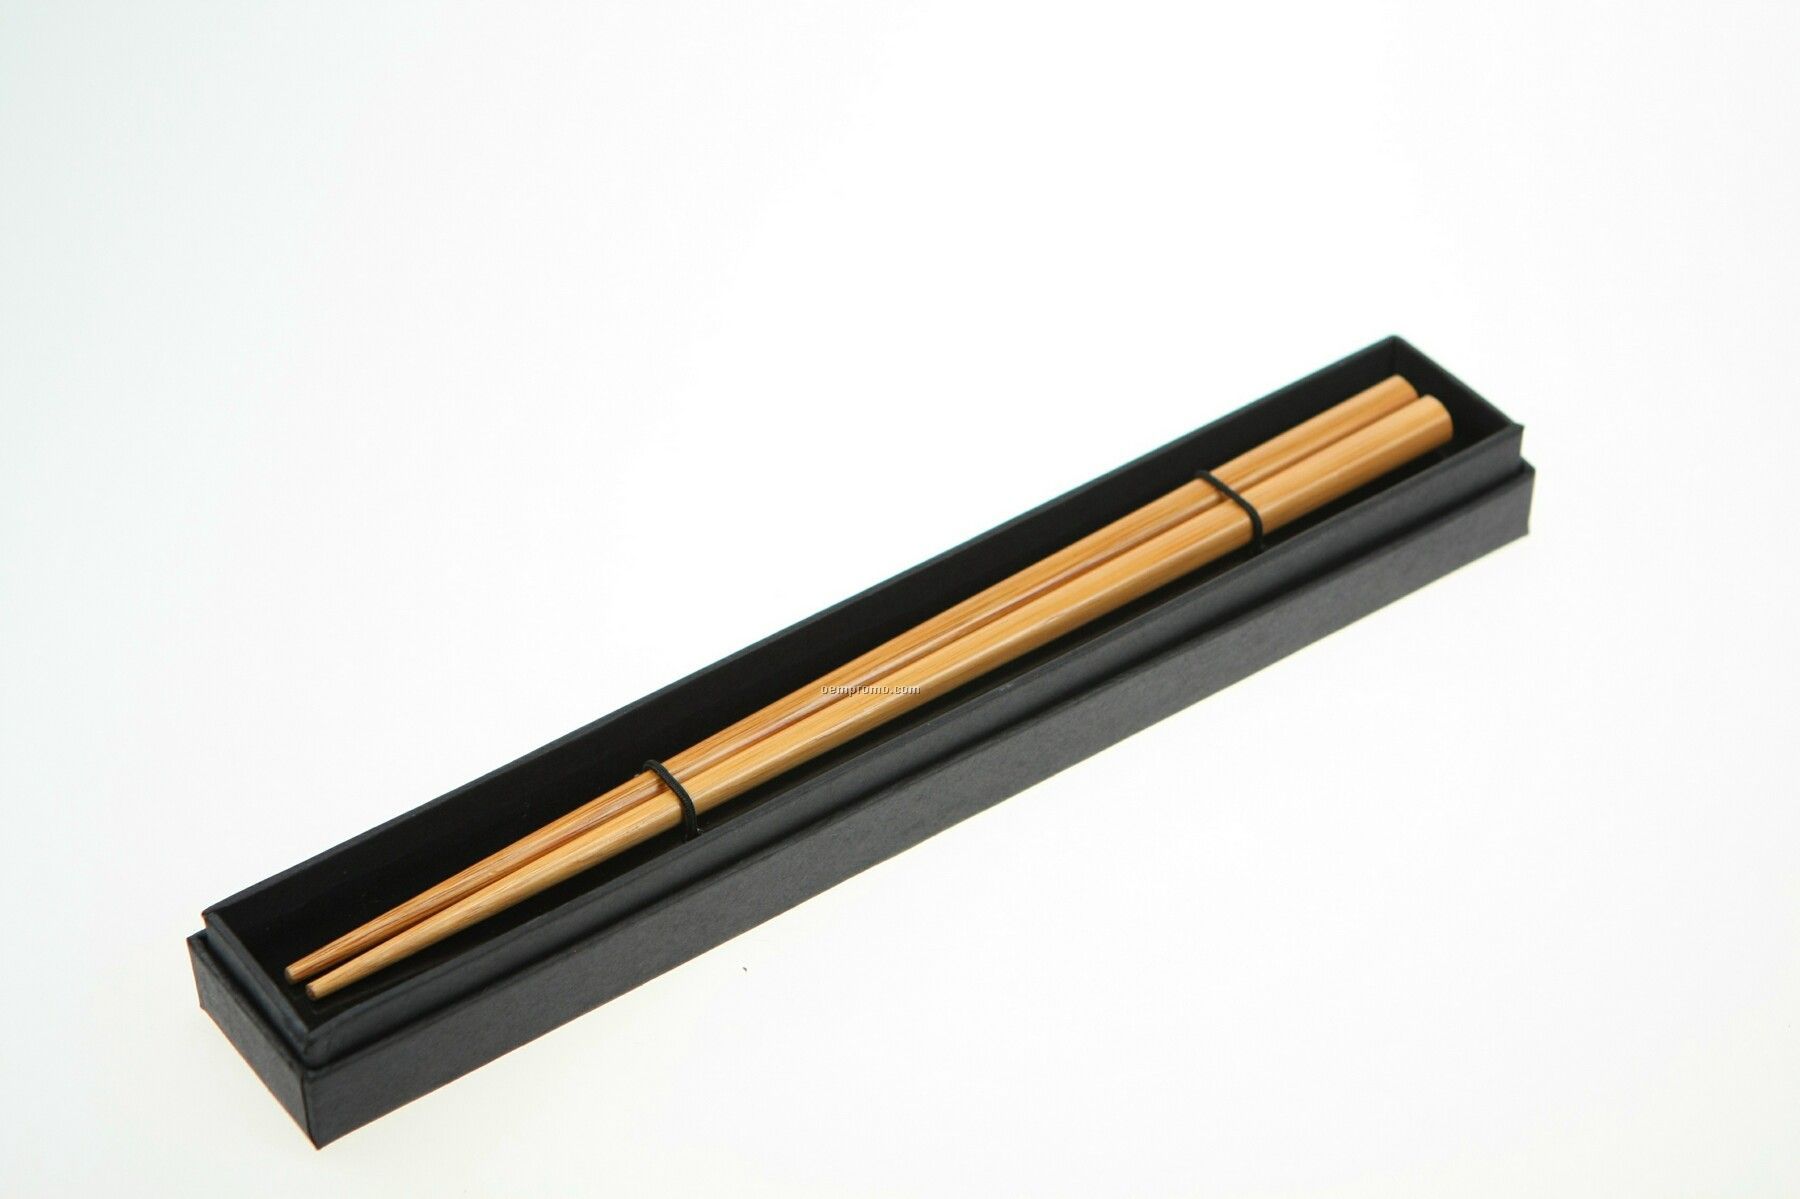 Bamboo Chopsticks In Black Cardboard Box